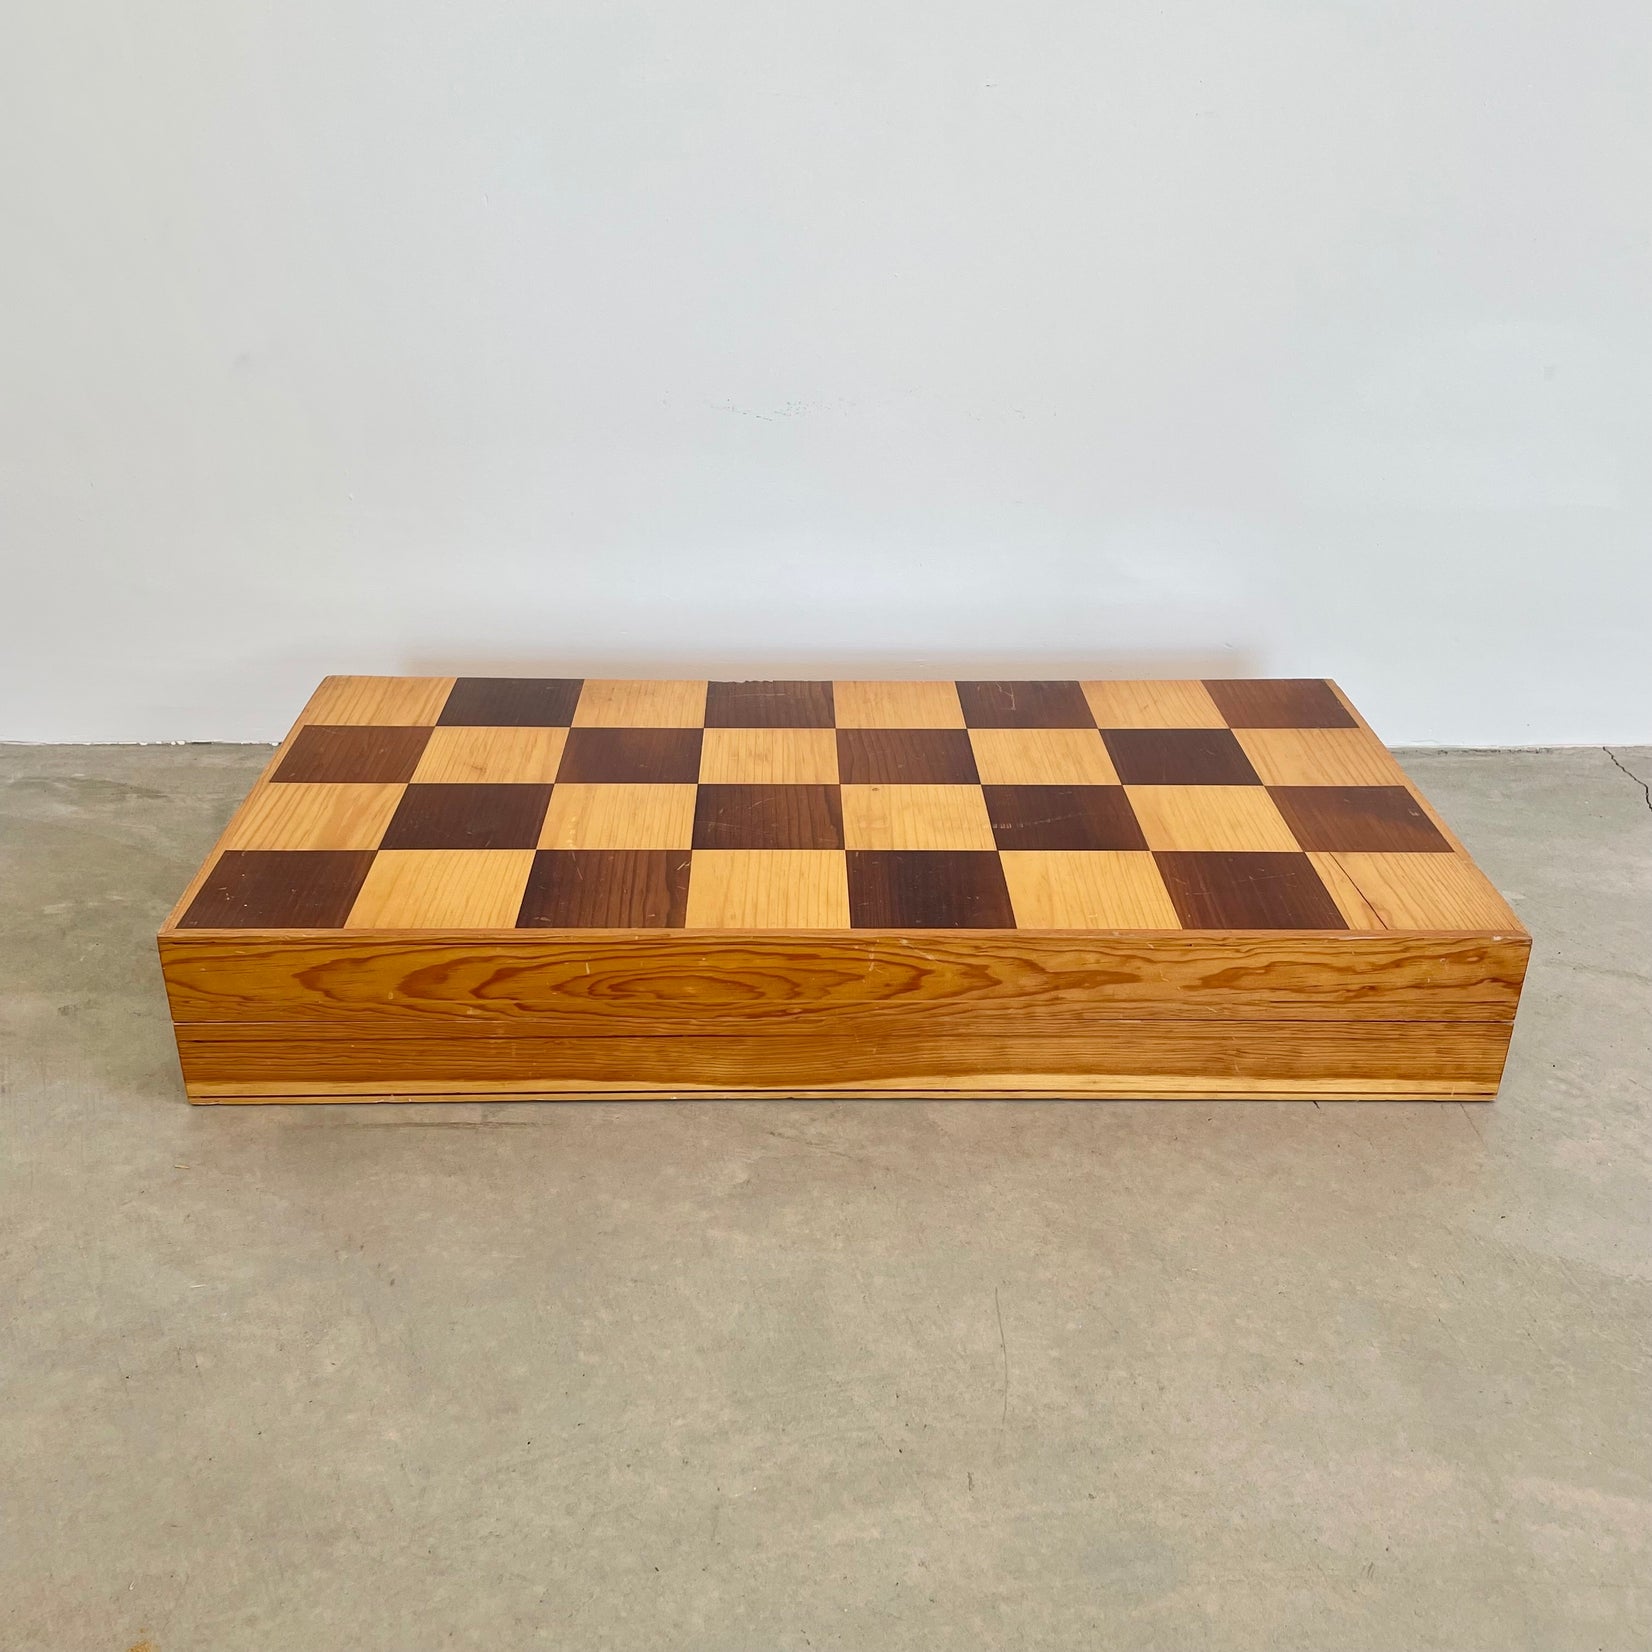 Oversized Wooden Chess Set, 1980s USSR